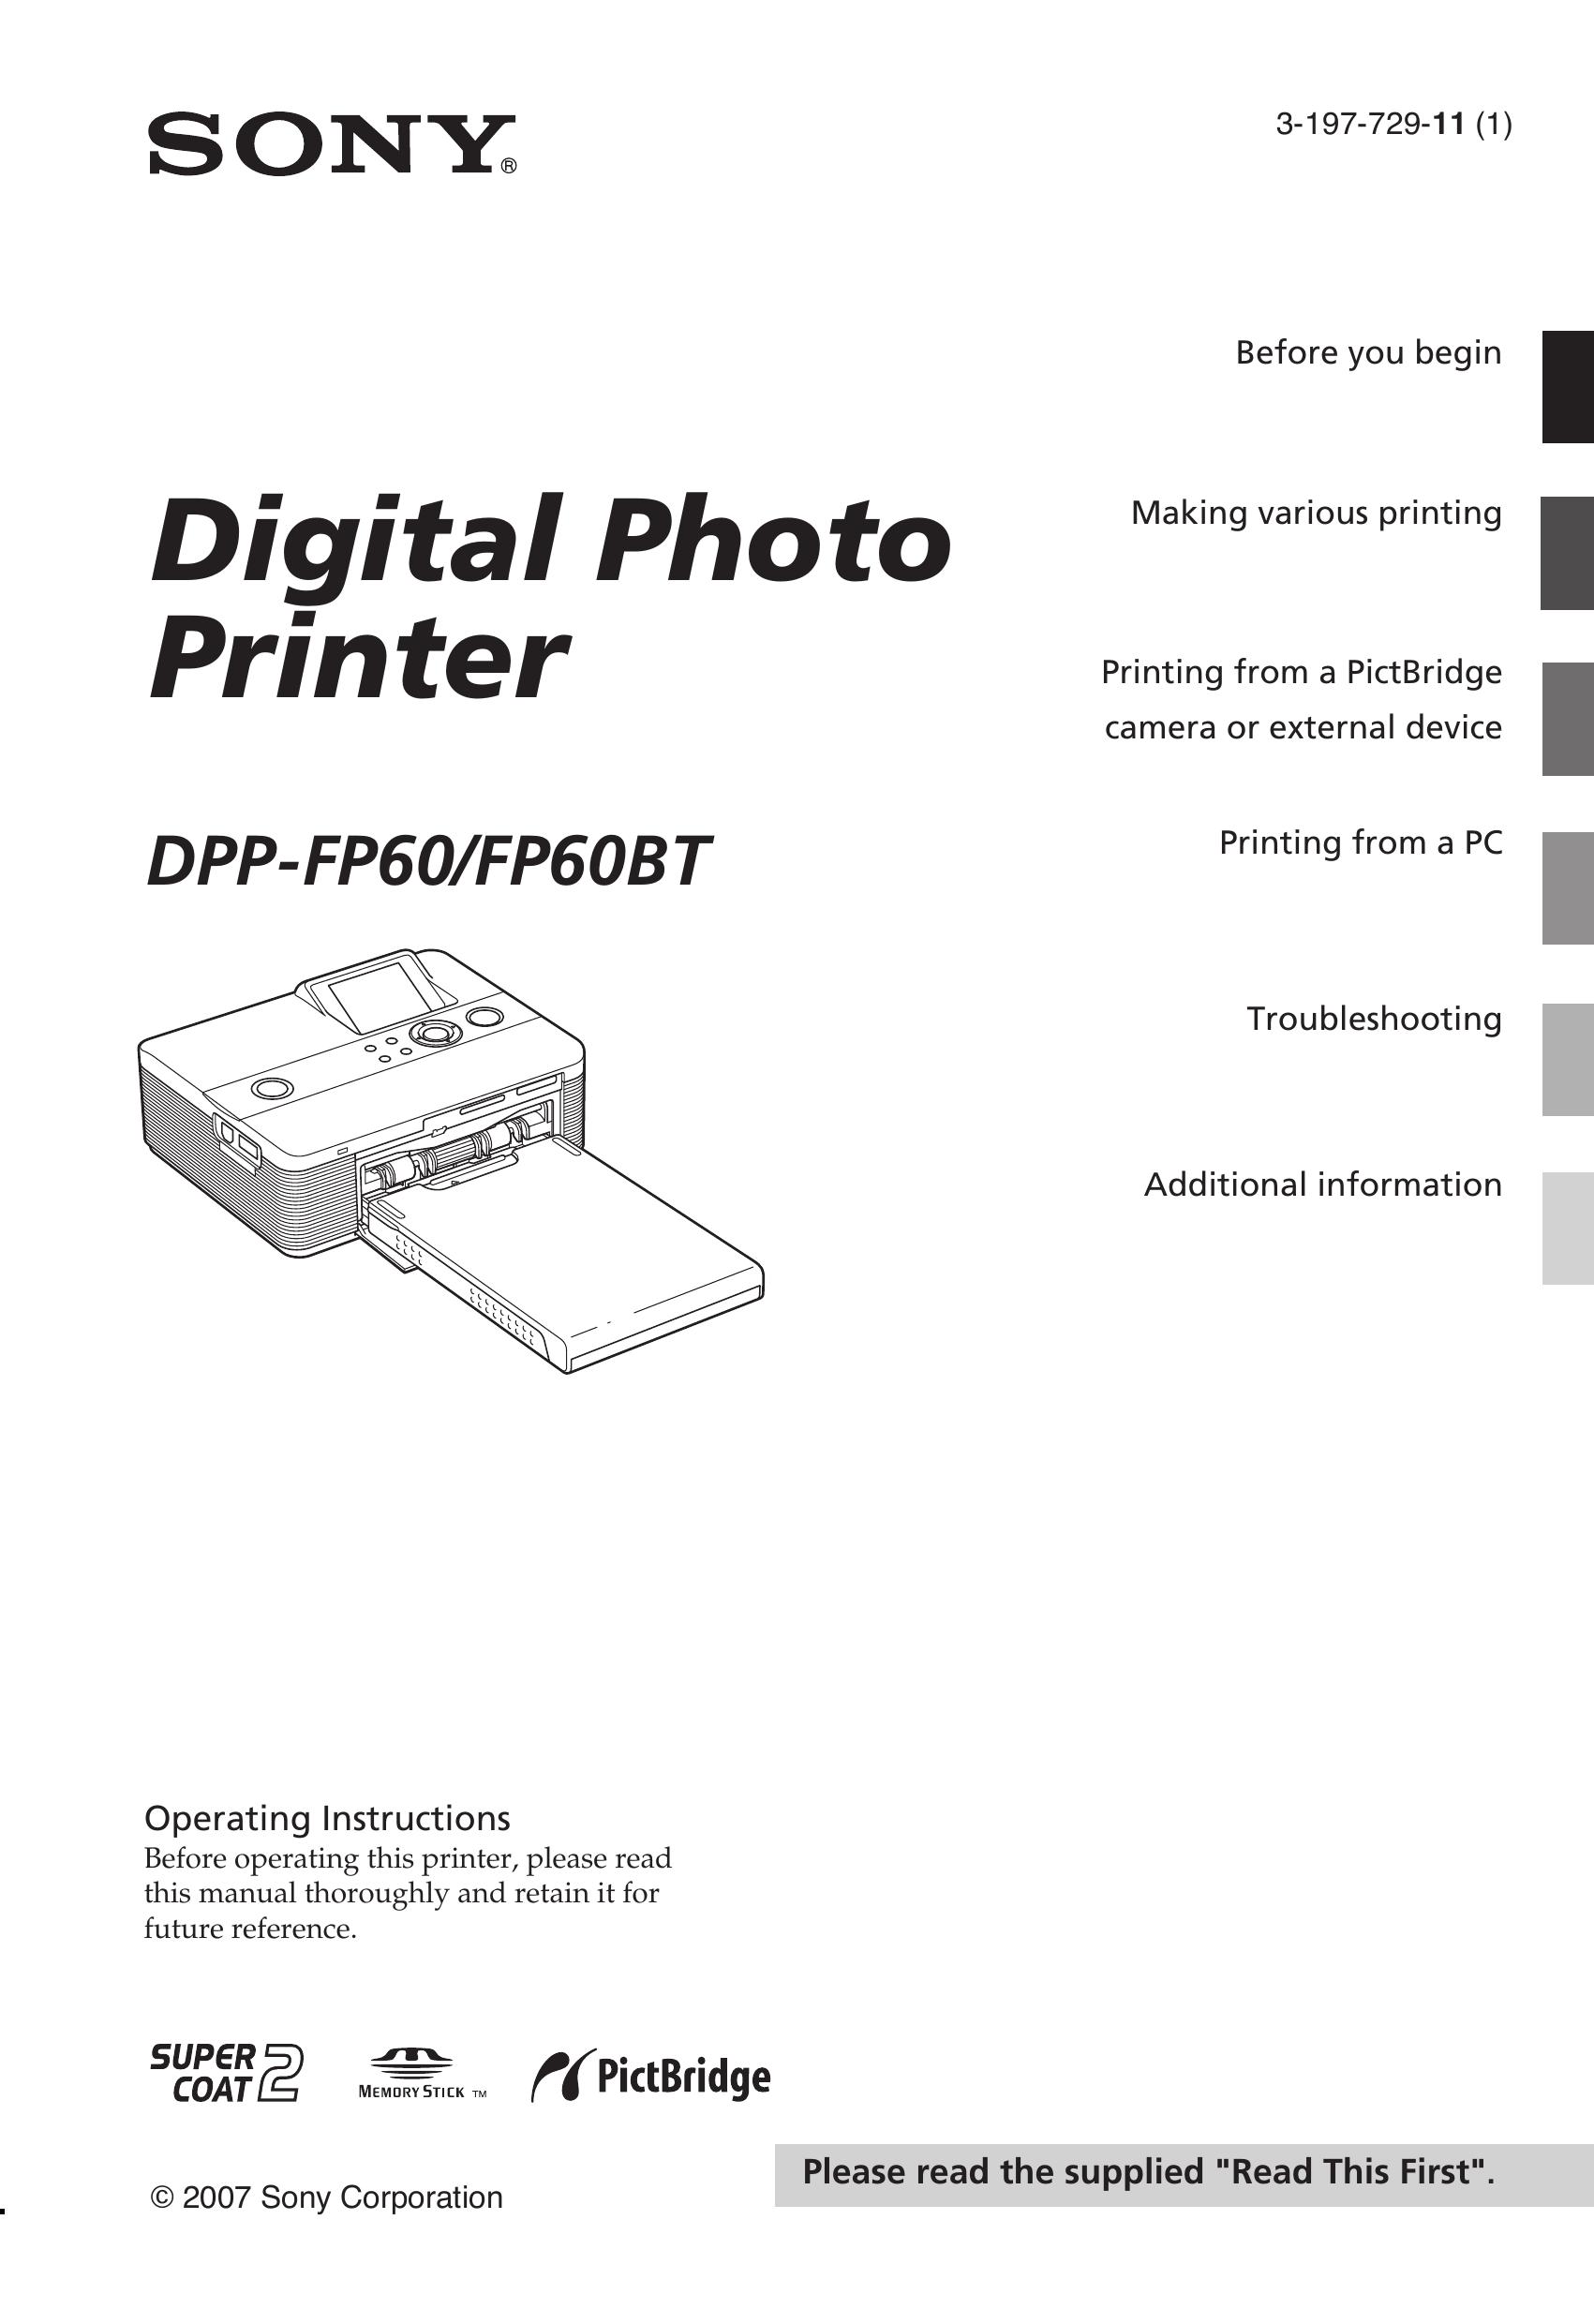 Sony DPP-FP60PT Photo Printer User Manual